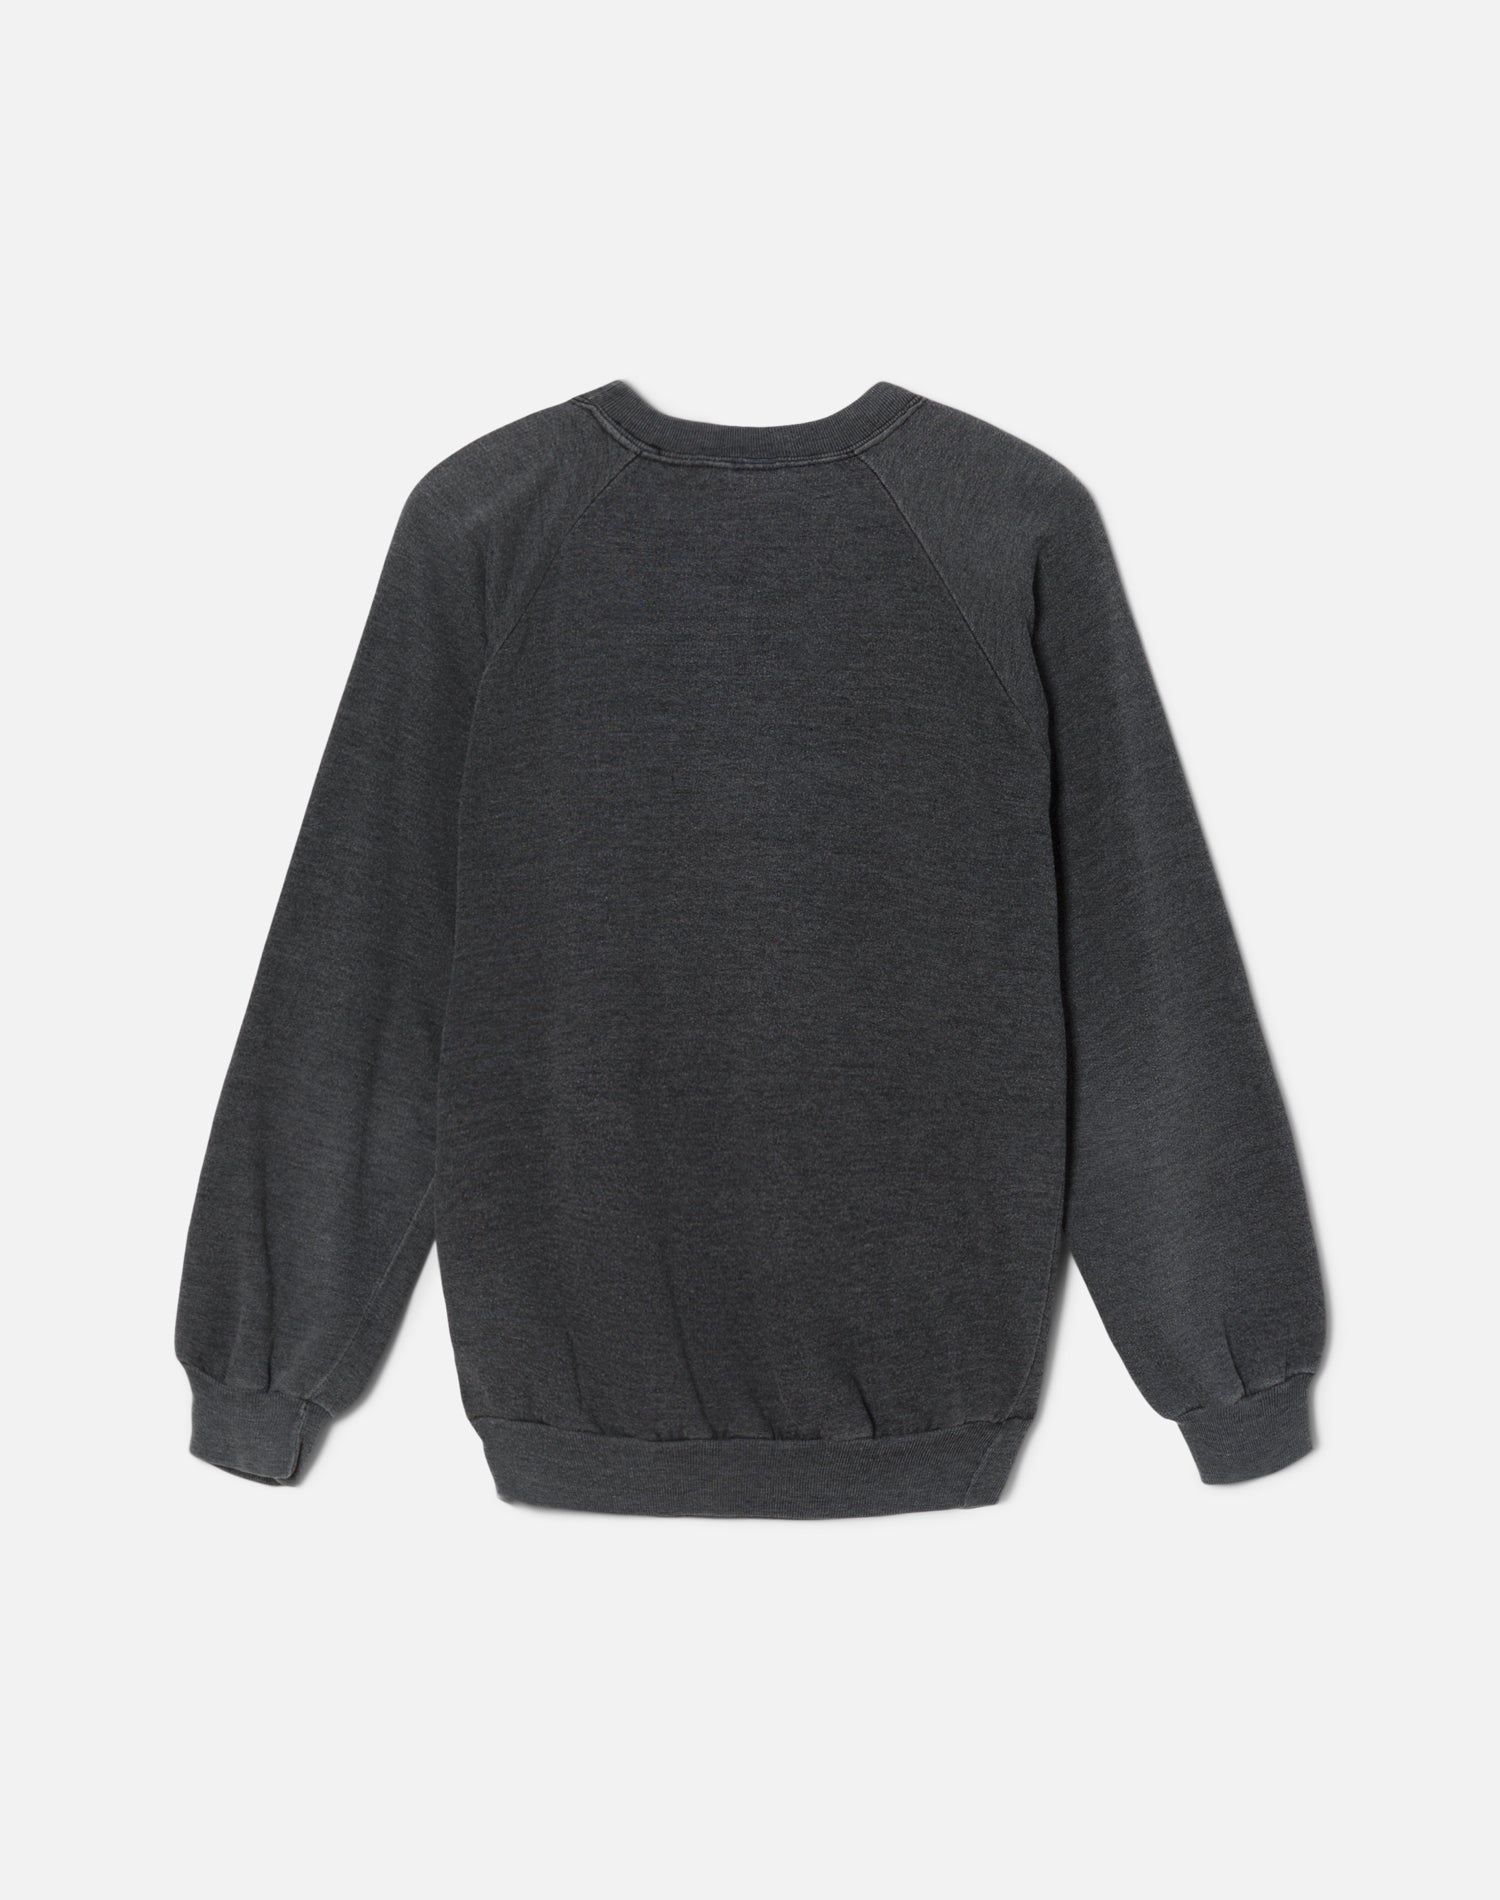 Upcycled Overdye Graphic Sweatshirt - Heathered Black